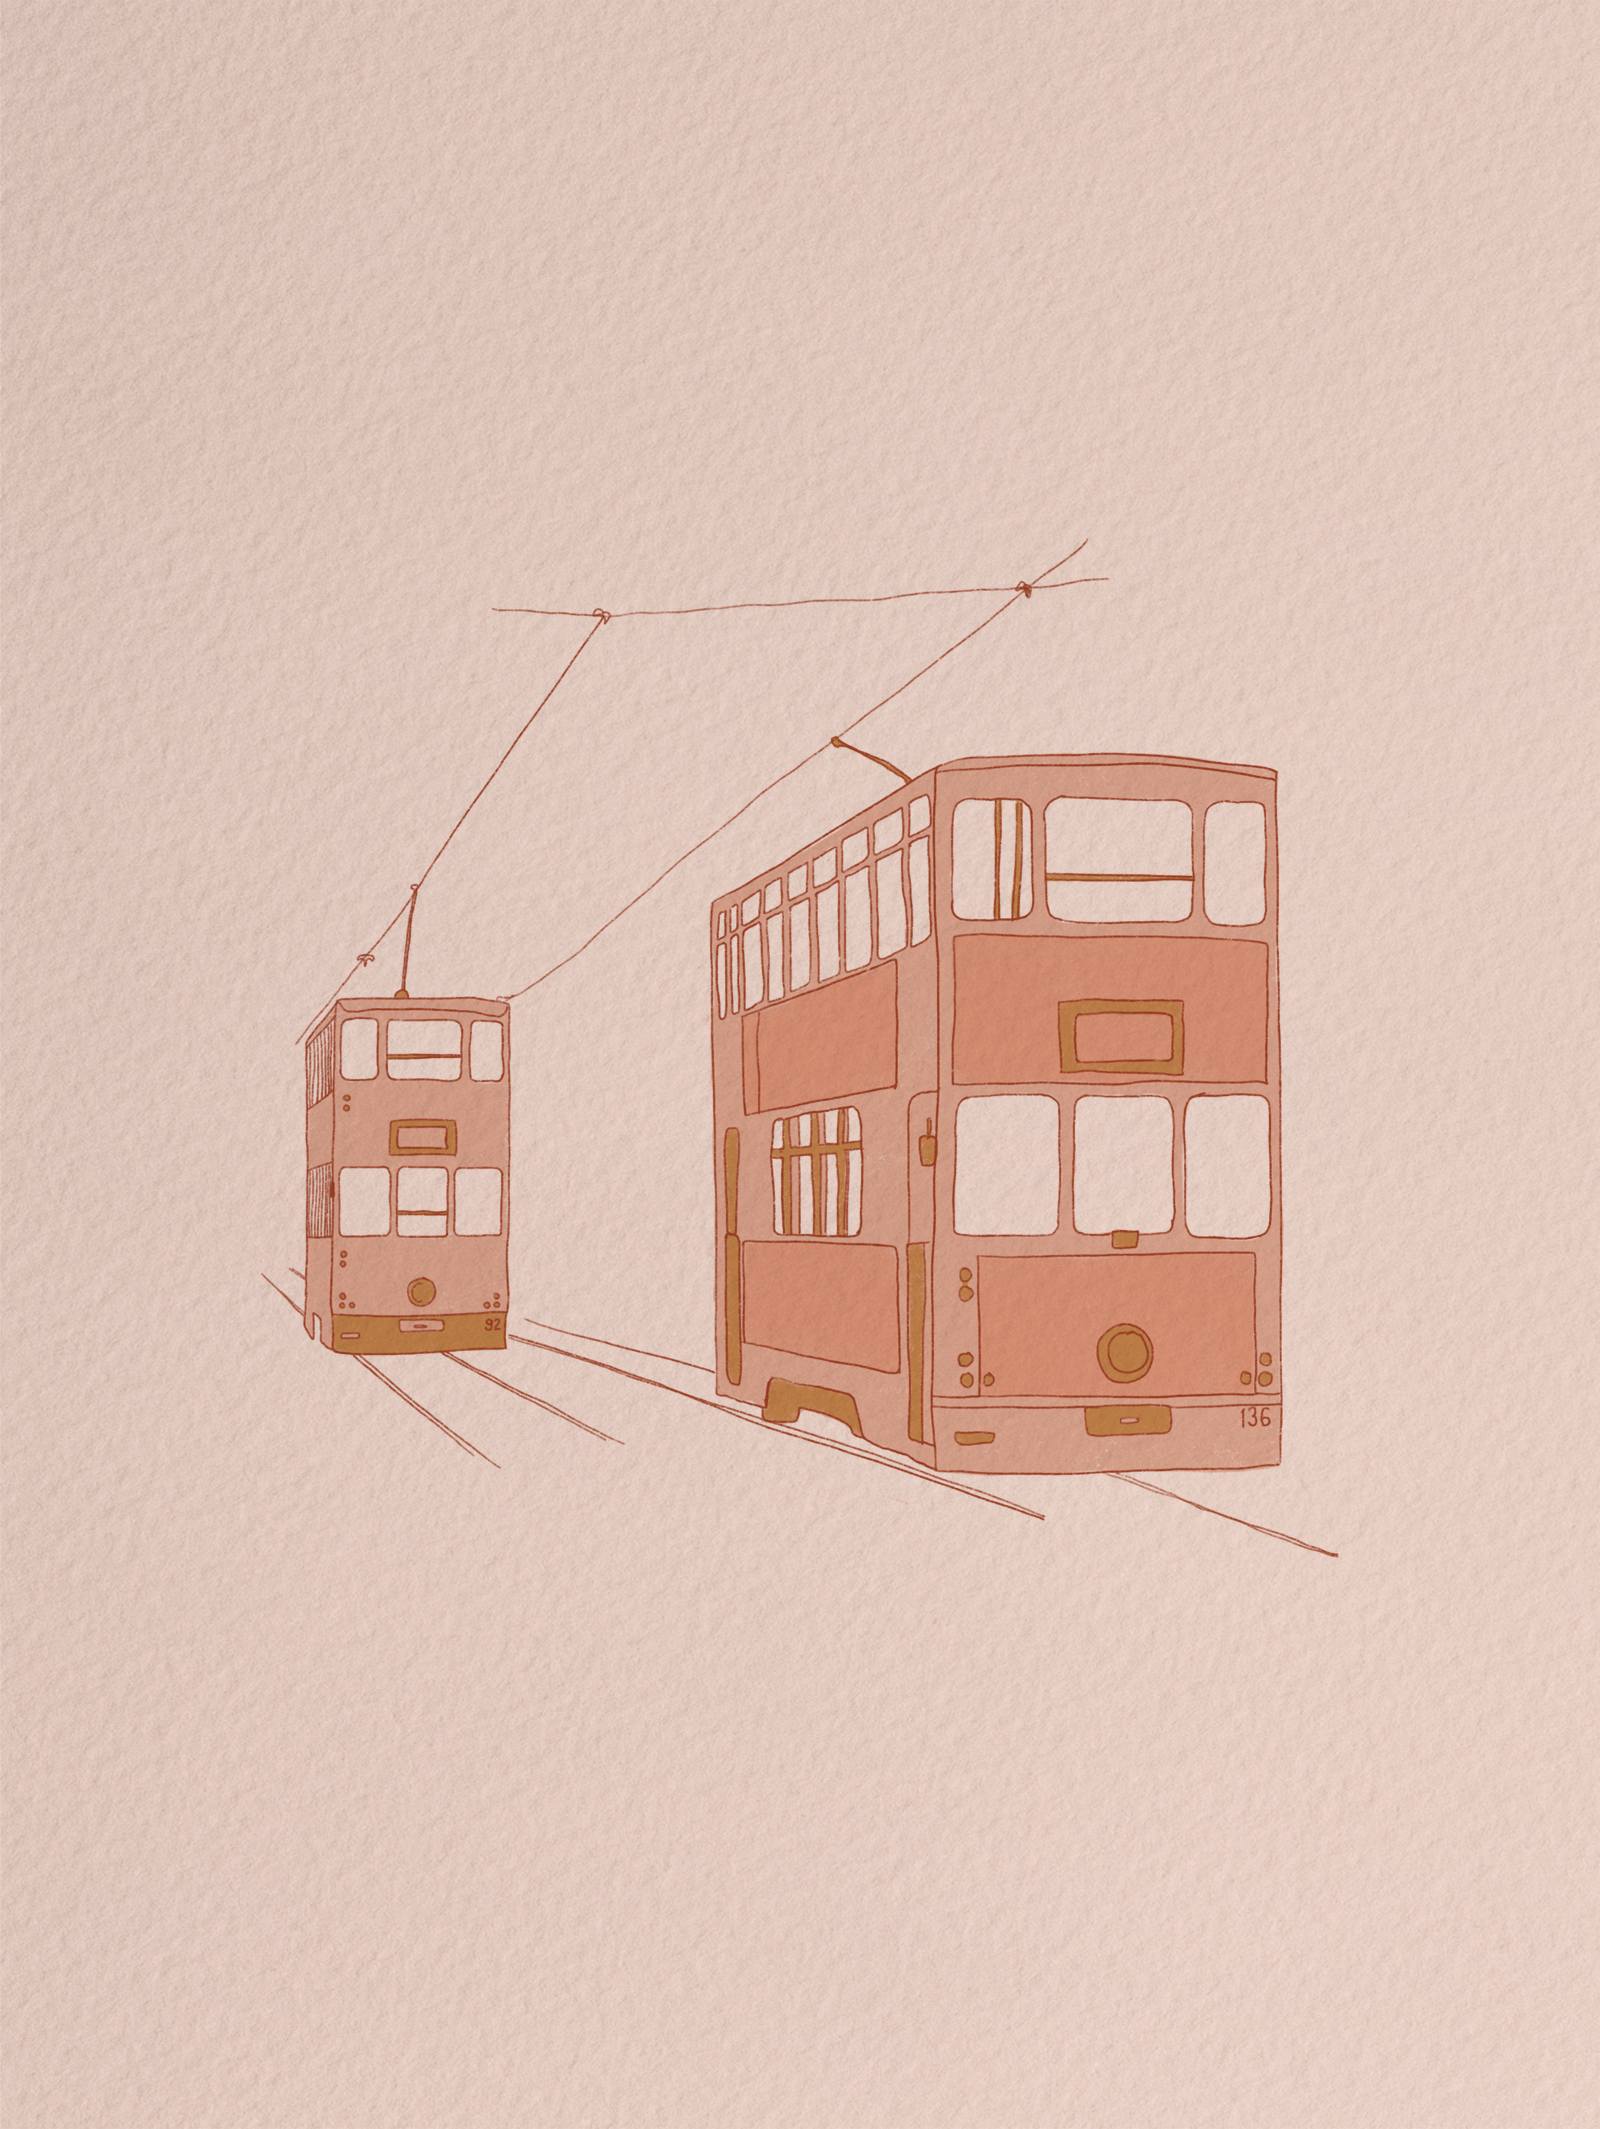 Hong Kong Tram Illustration